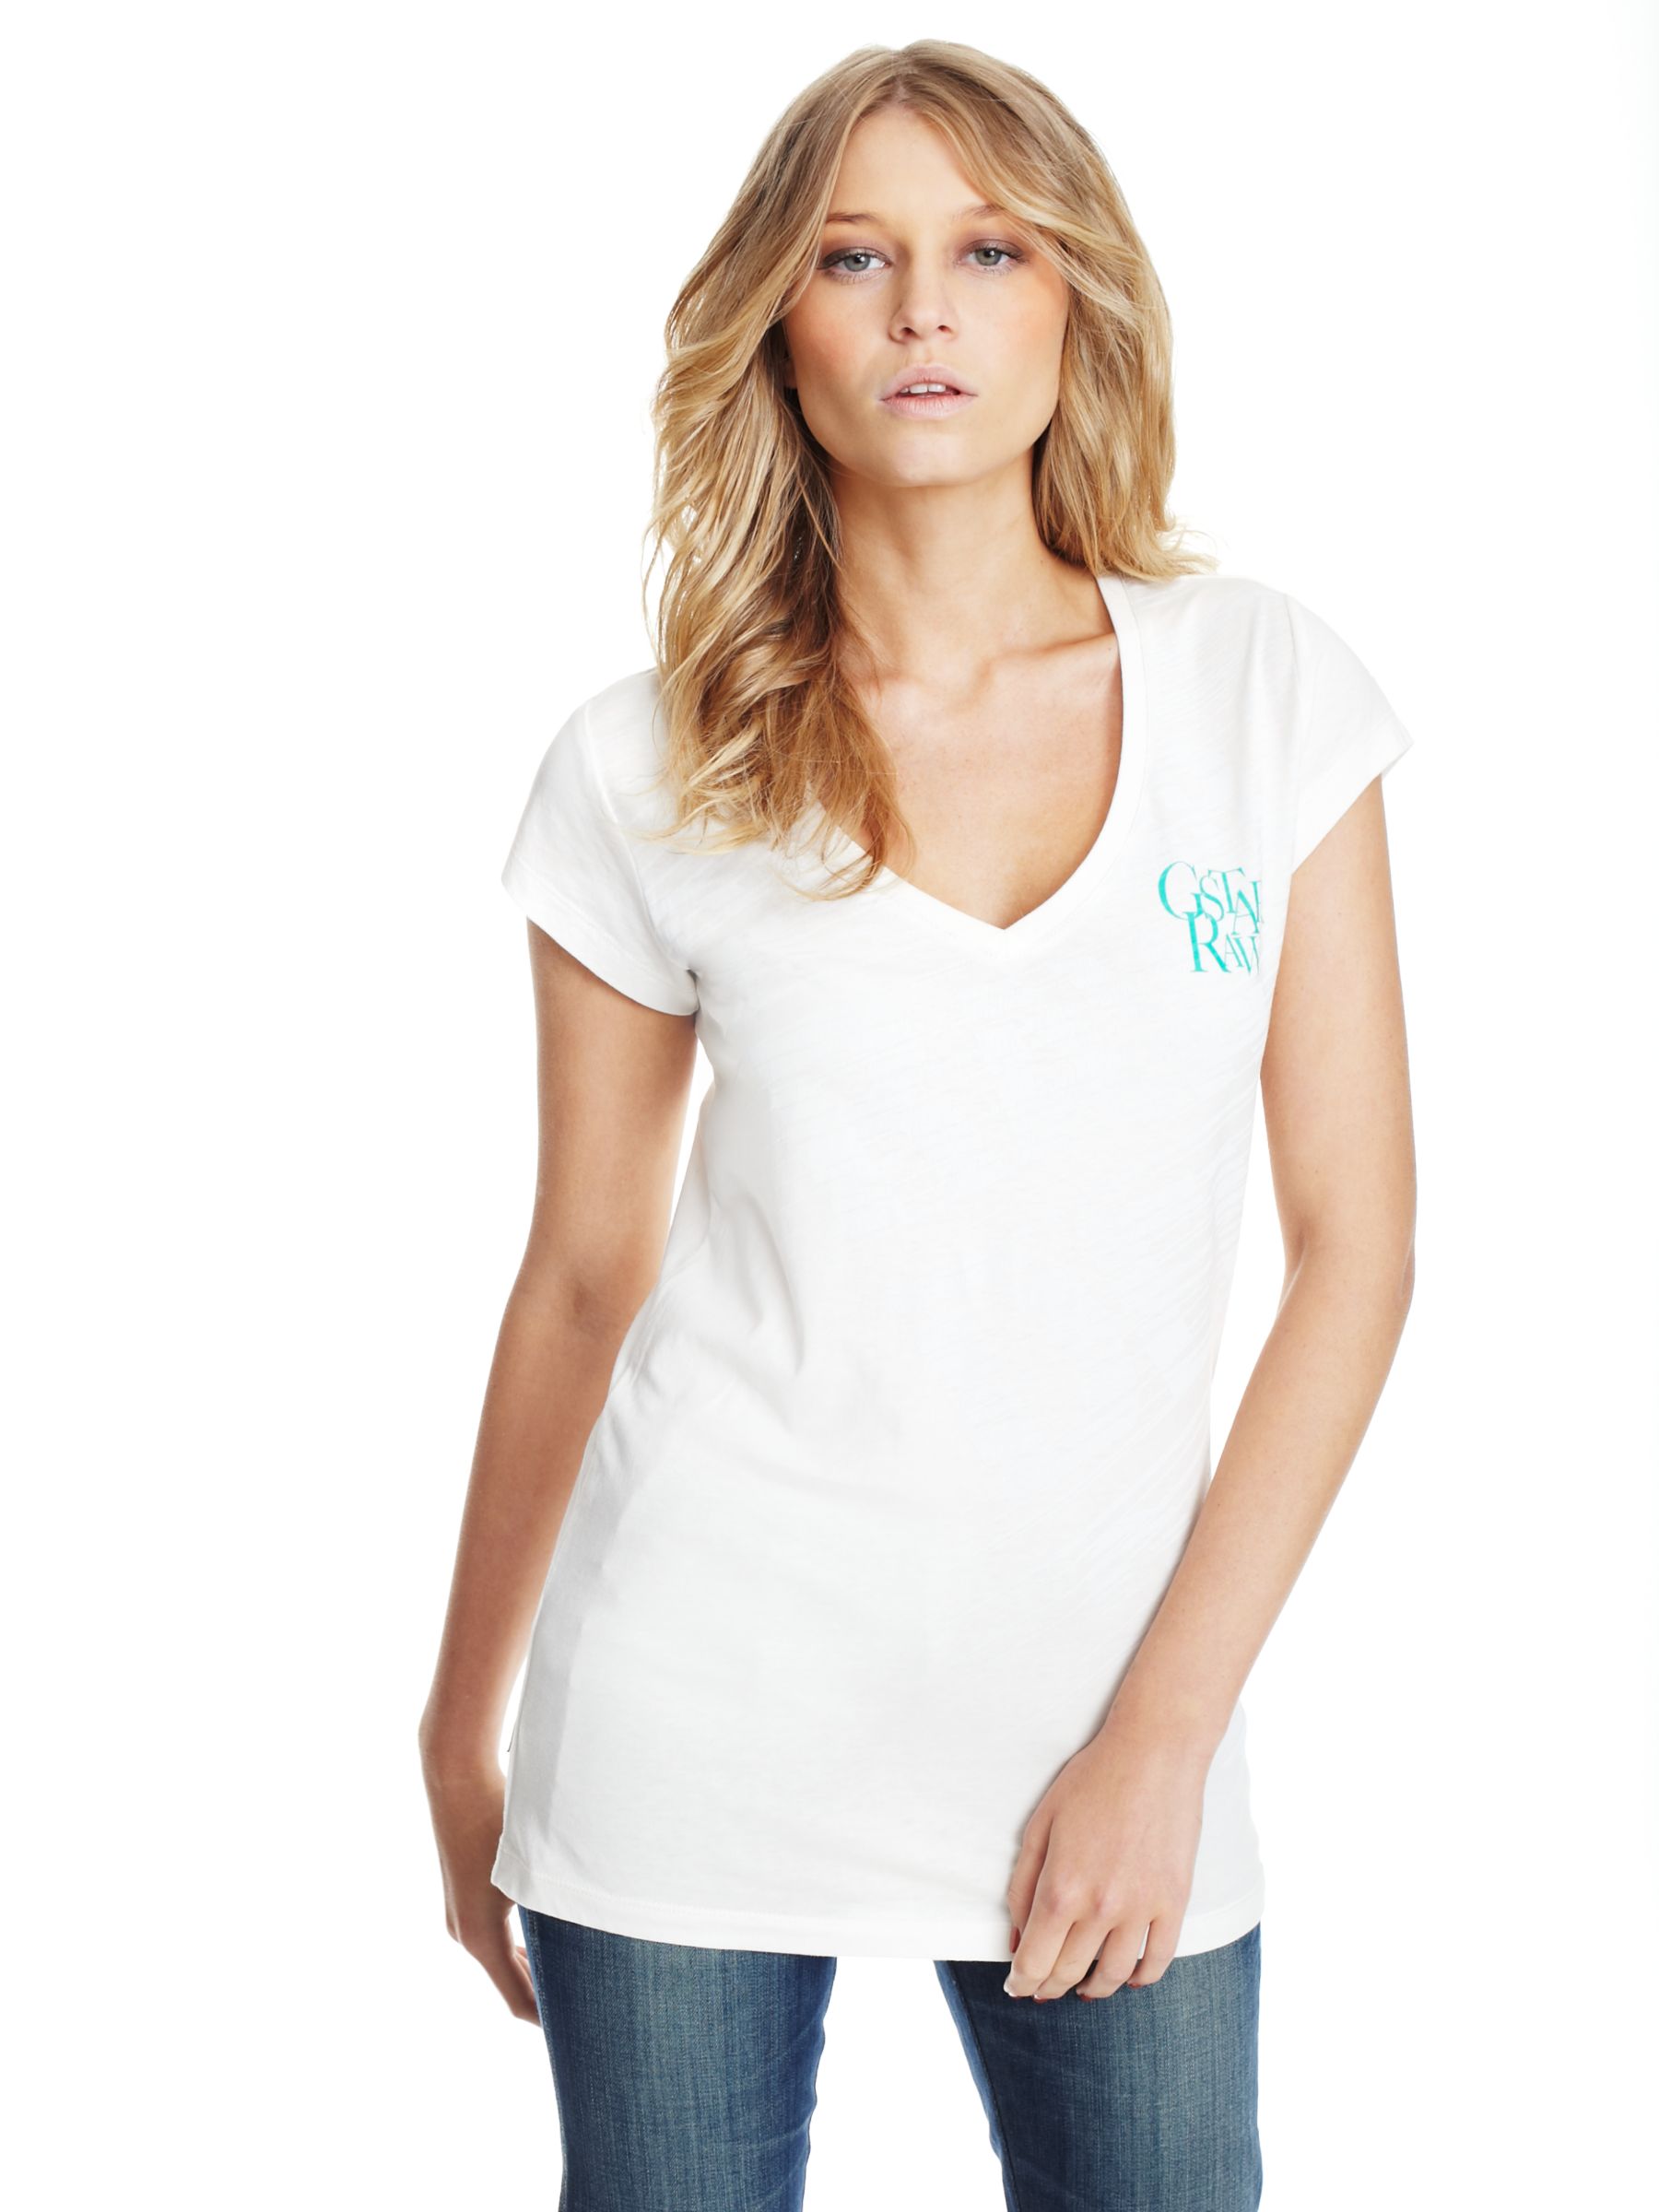 G-Star Raw Olivia Cap Sleeve T-Shirt, White